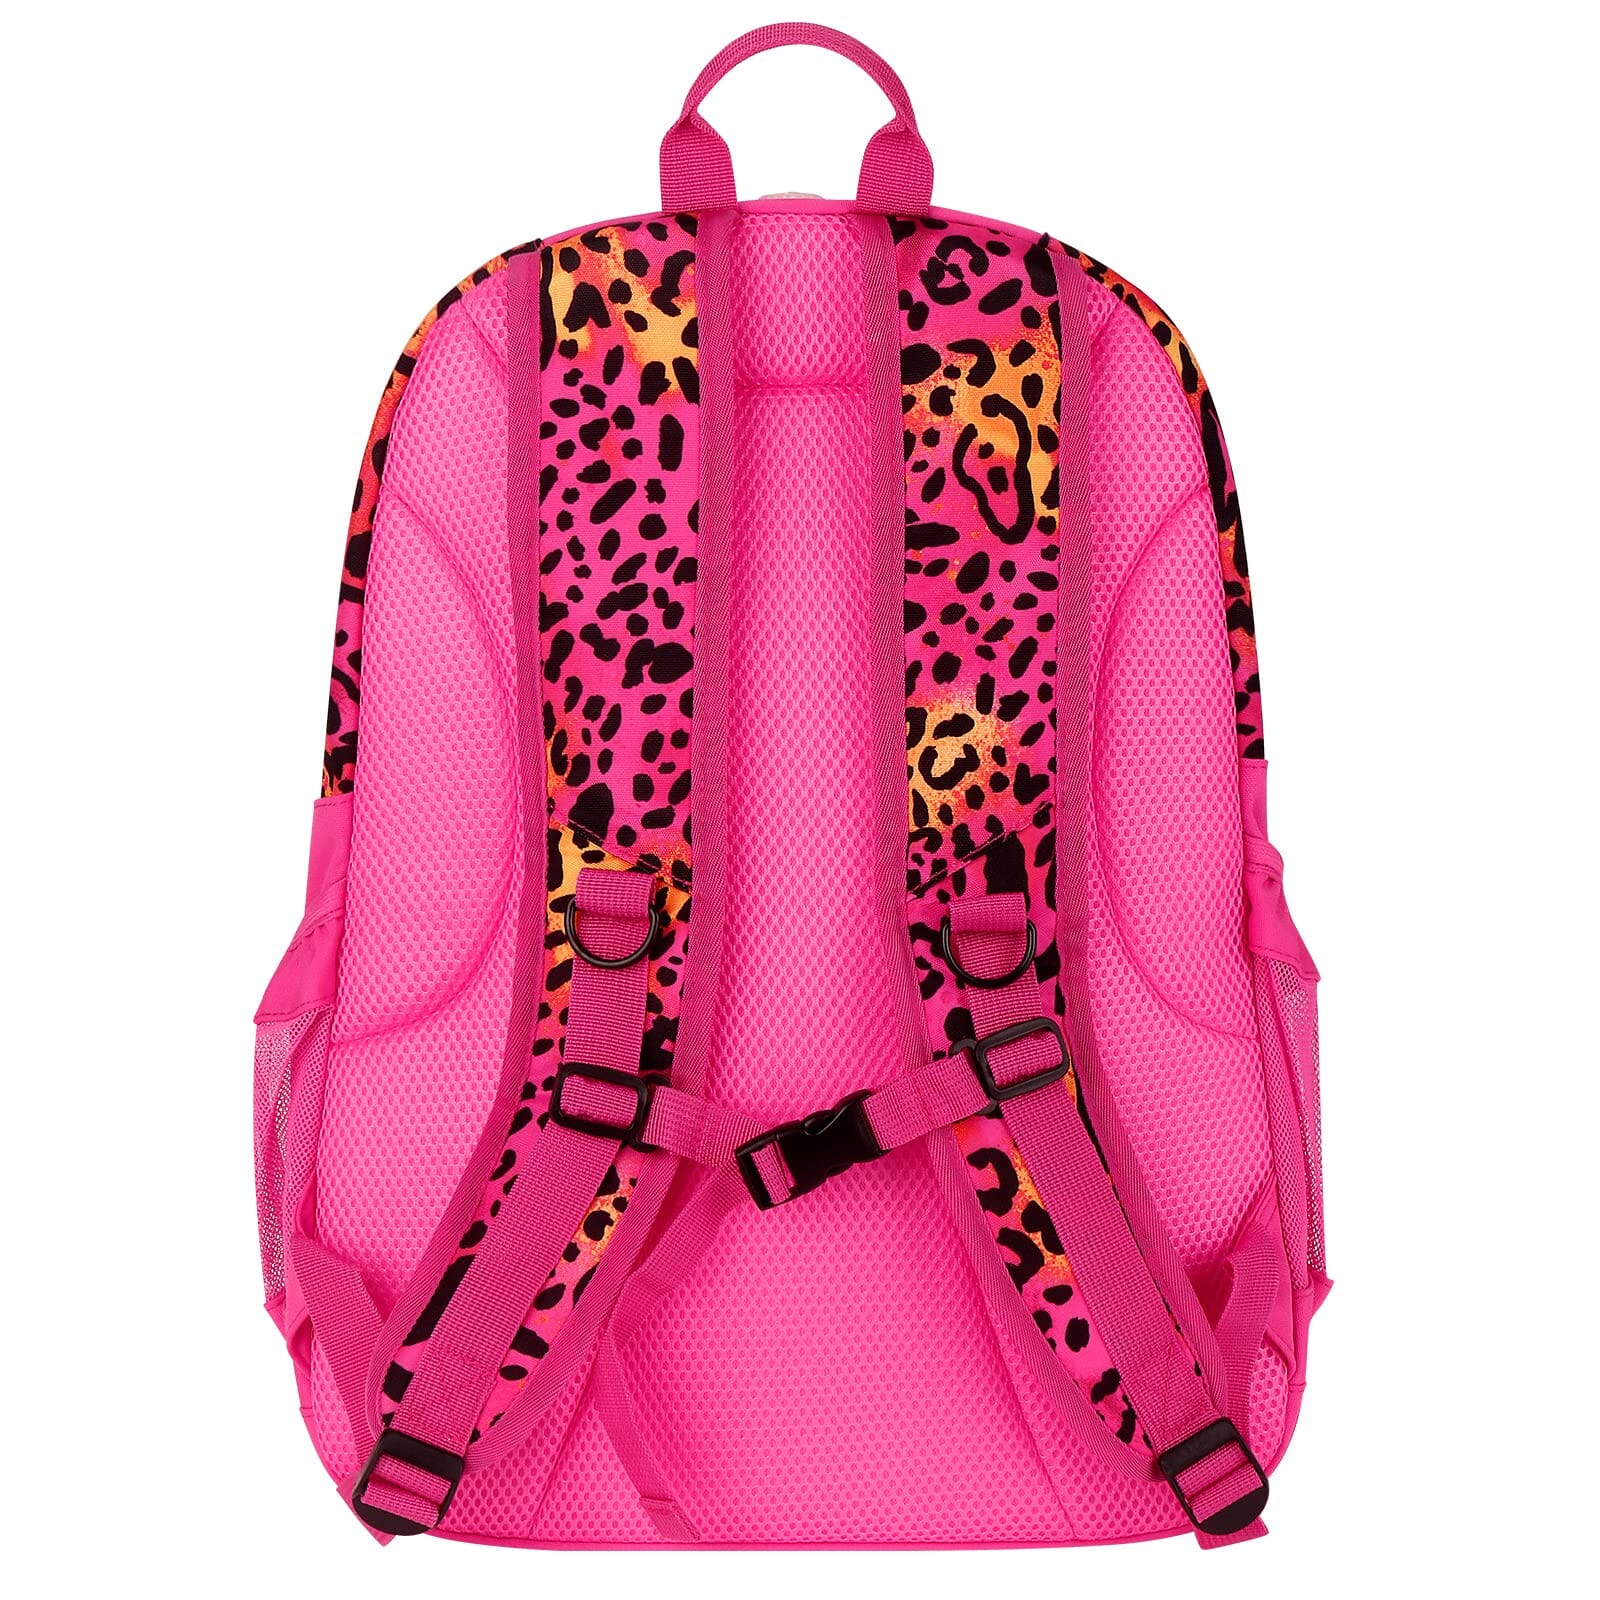 Choco Mocha Leopard Backpack for Teen Girls, Travel School Backpack for Girls Middle School Large Bookbag 18 Inch, Cheetah Hot Pink chocomochakids 